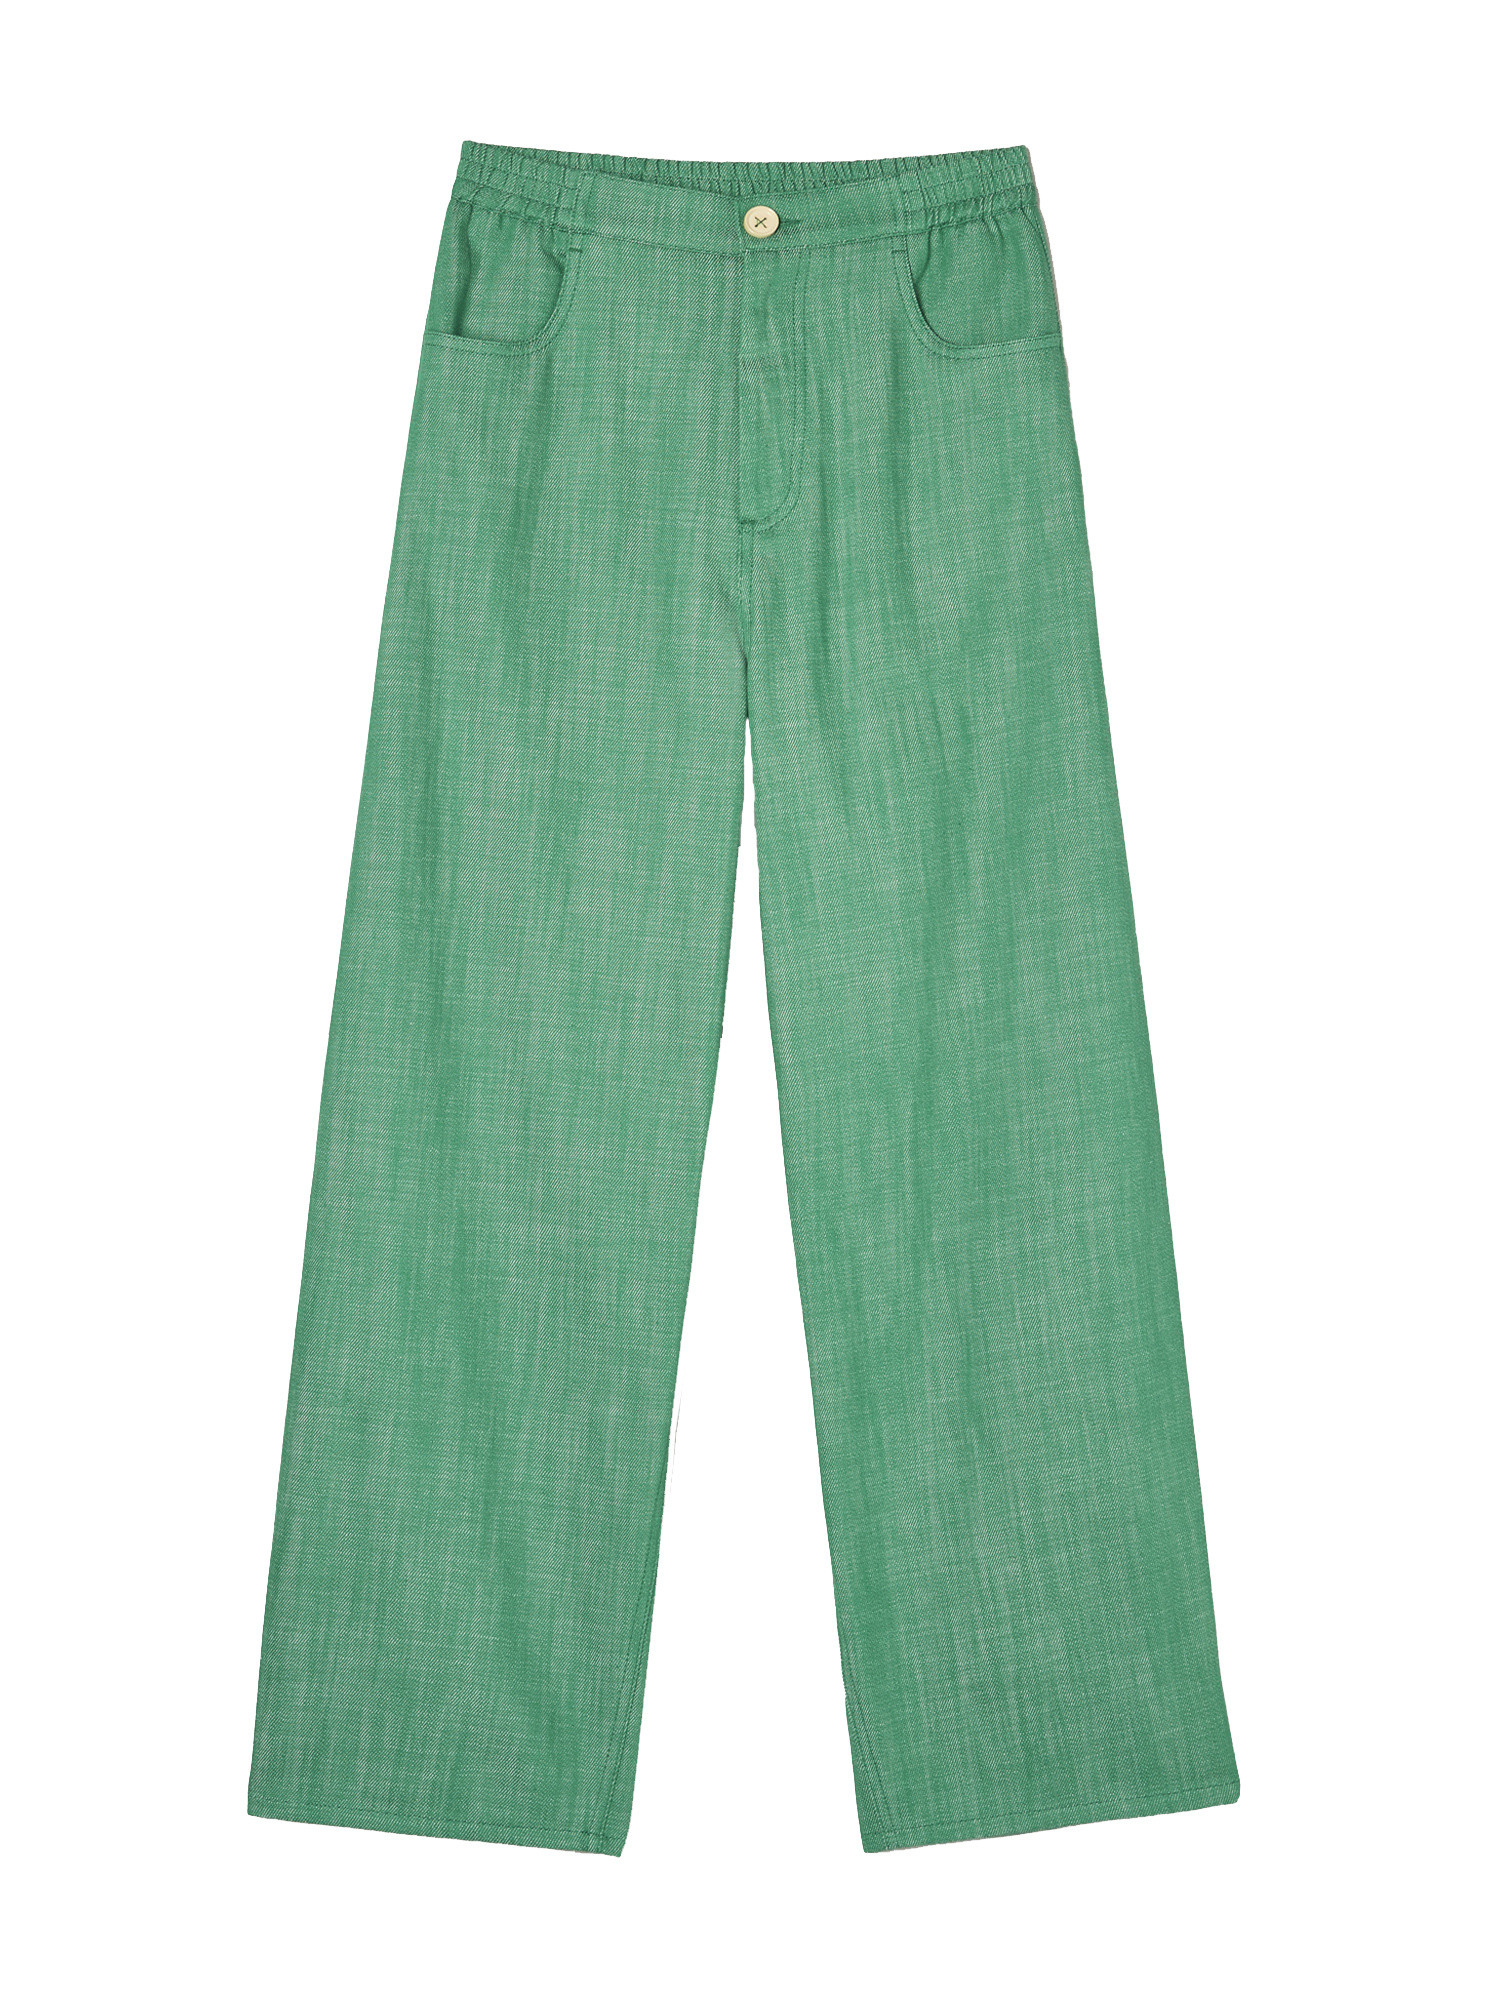 Attic and Barn - Pantaloni Cortina in cotone, Verde, large image number 0